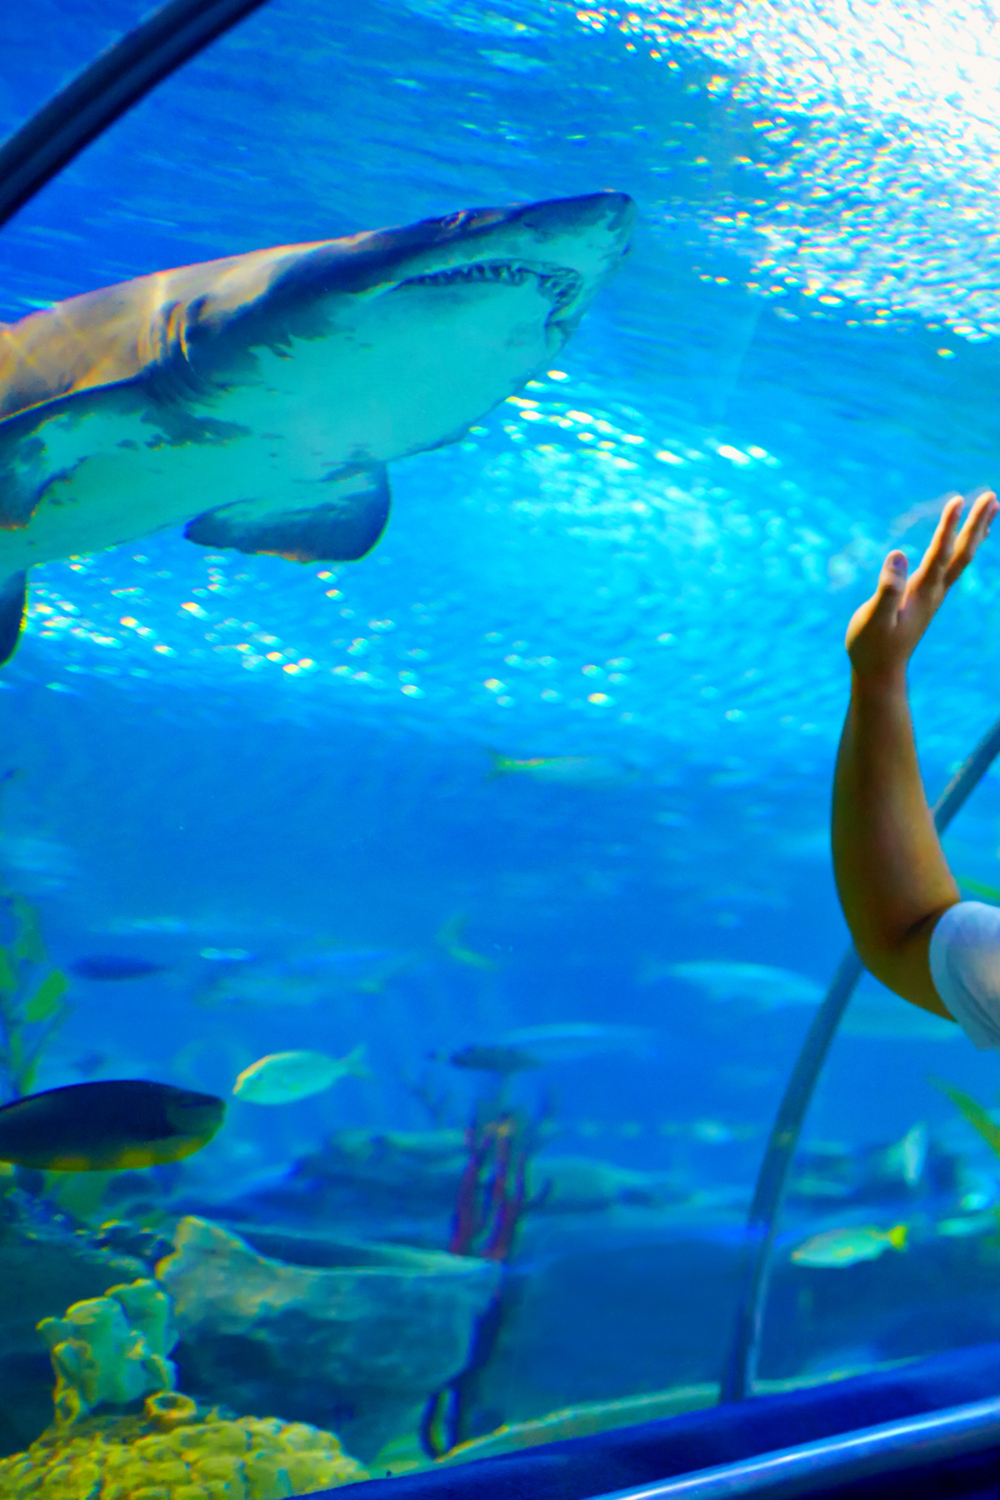 Dreams of A Shark in an Aquarium